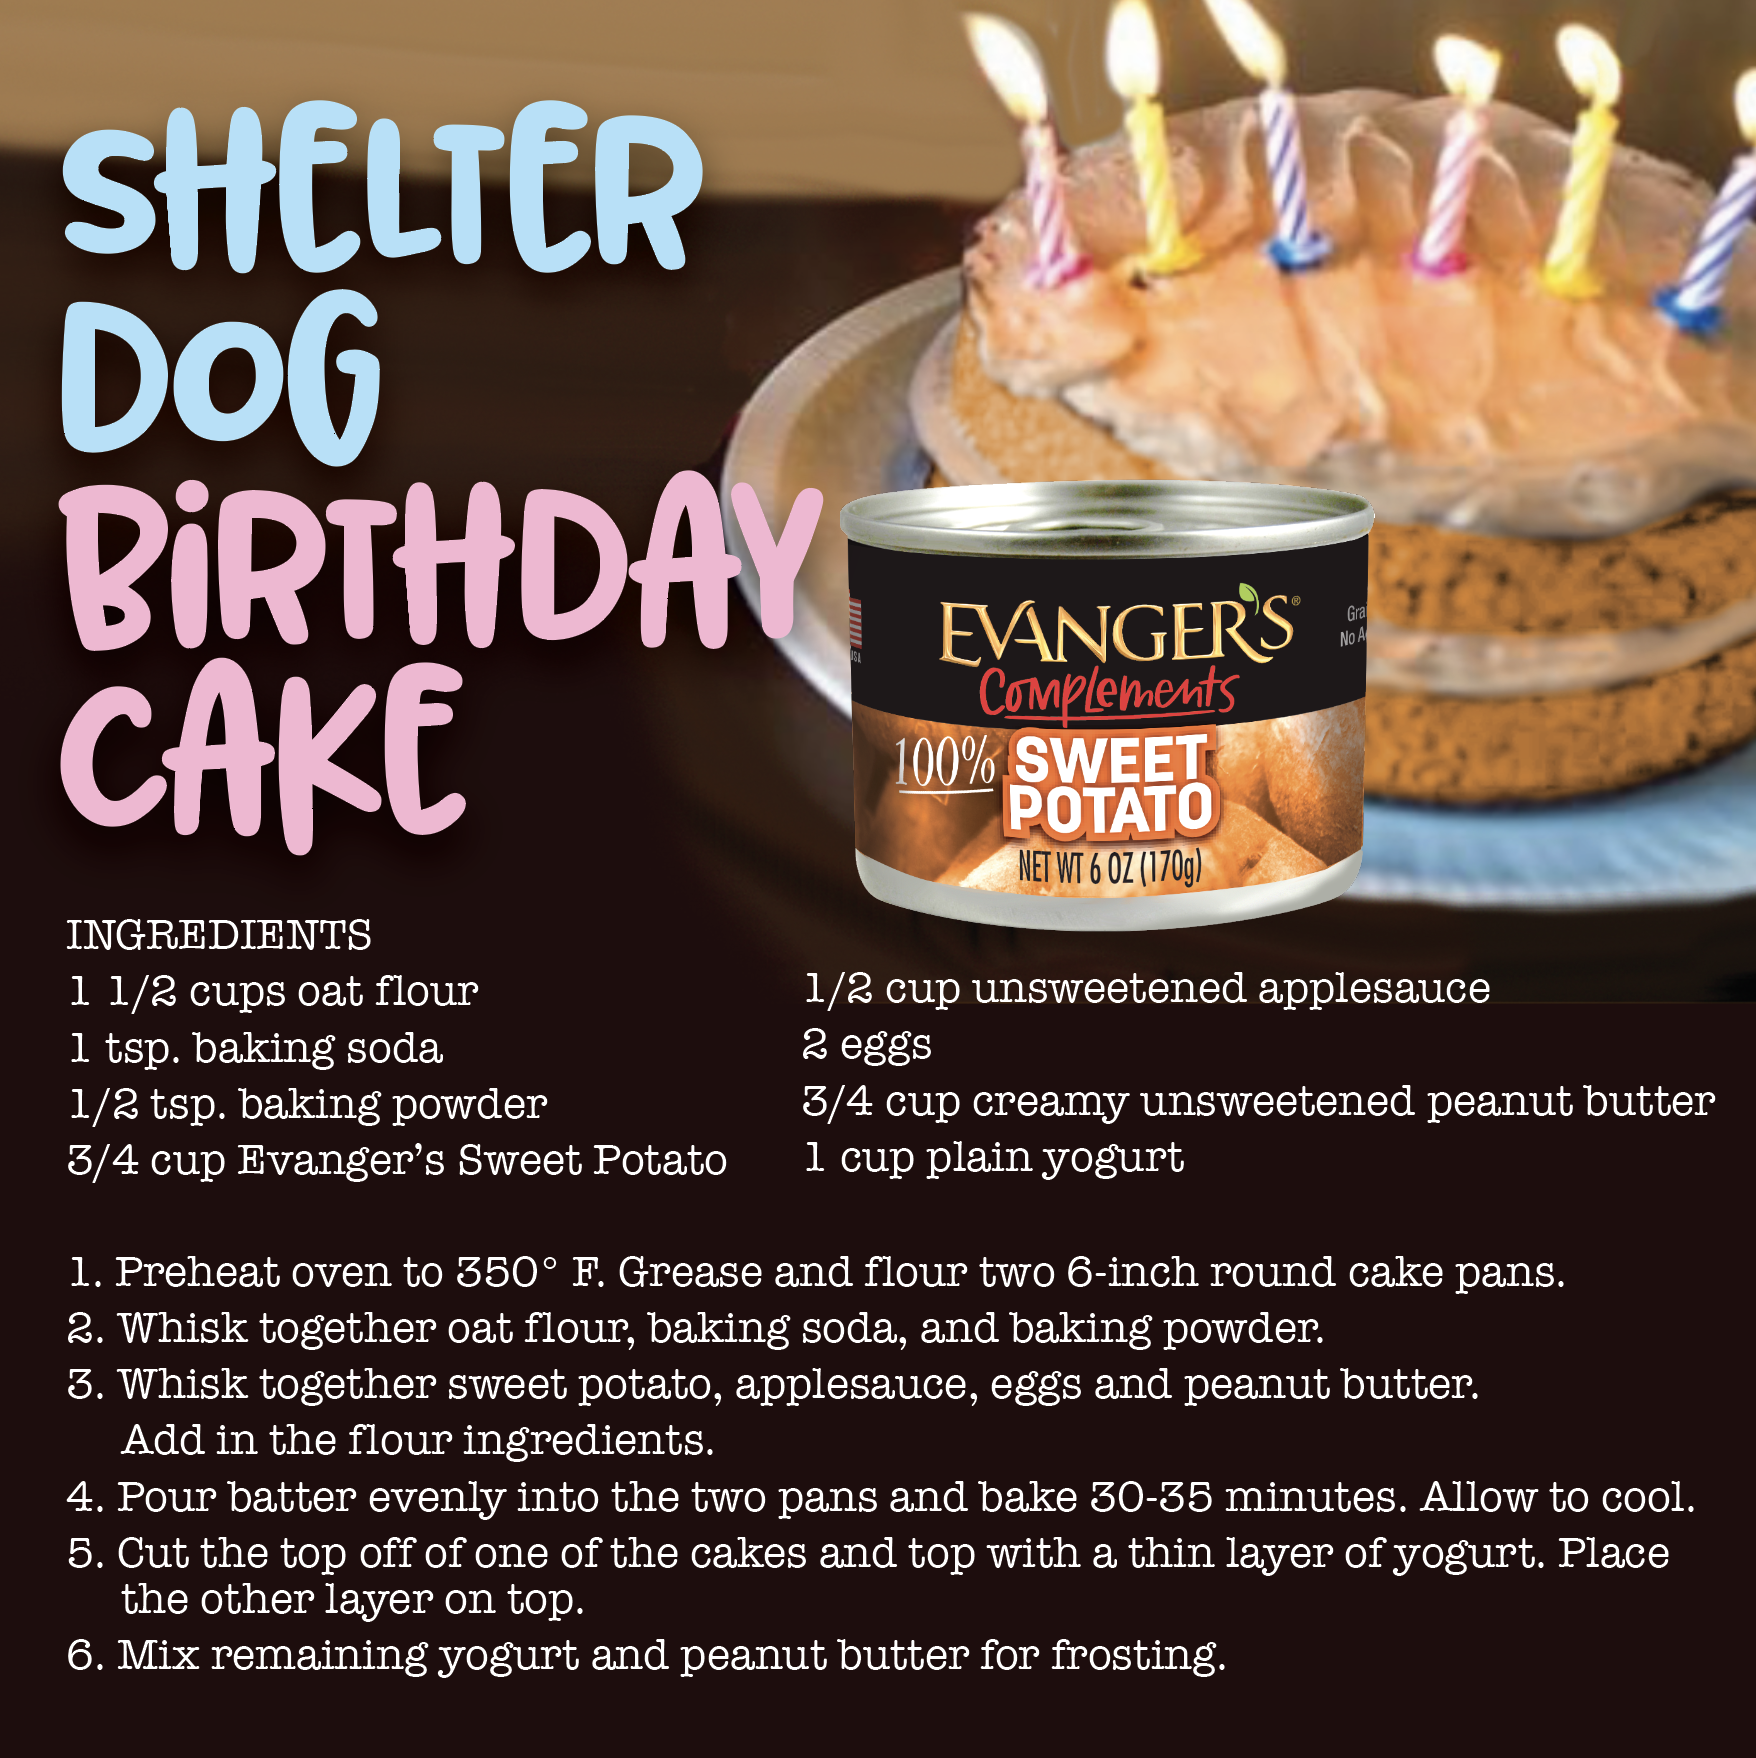 How to Make a Shelter Dog Birthday Cake!